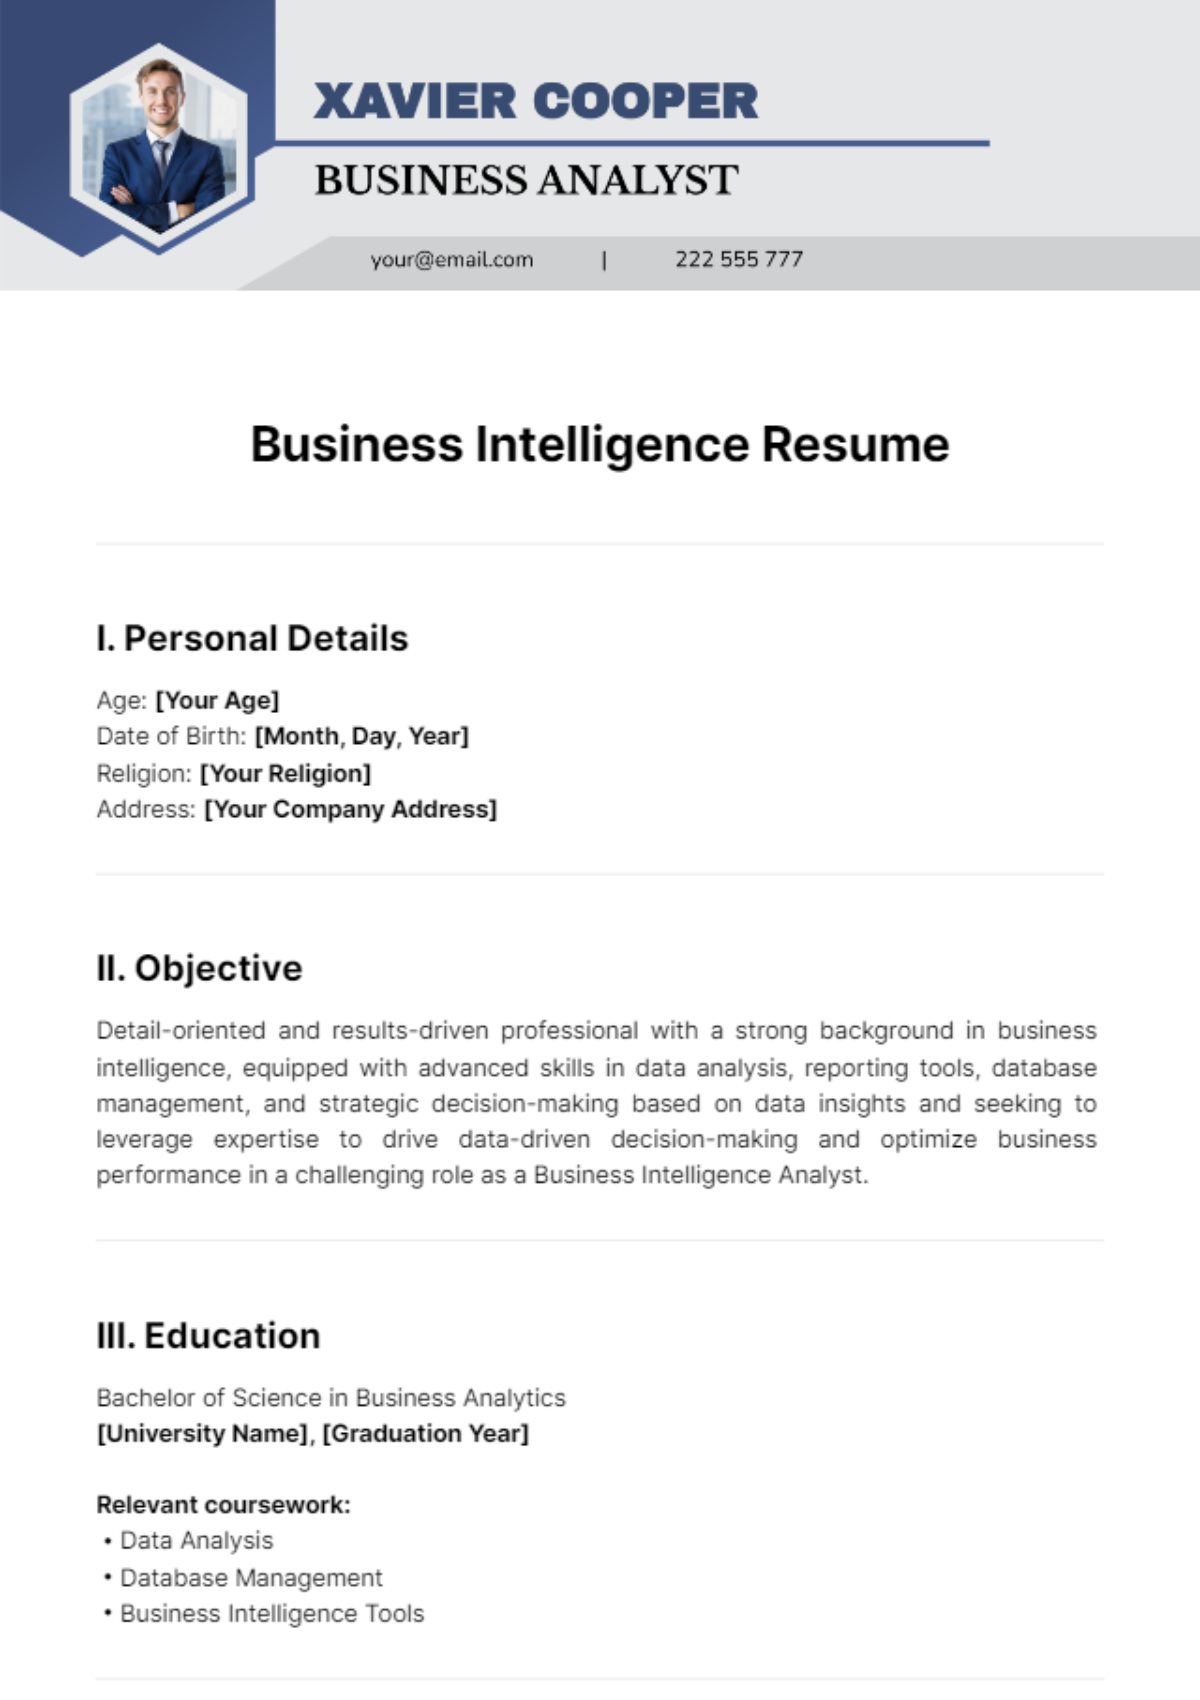 Business Intelligence Resume Template